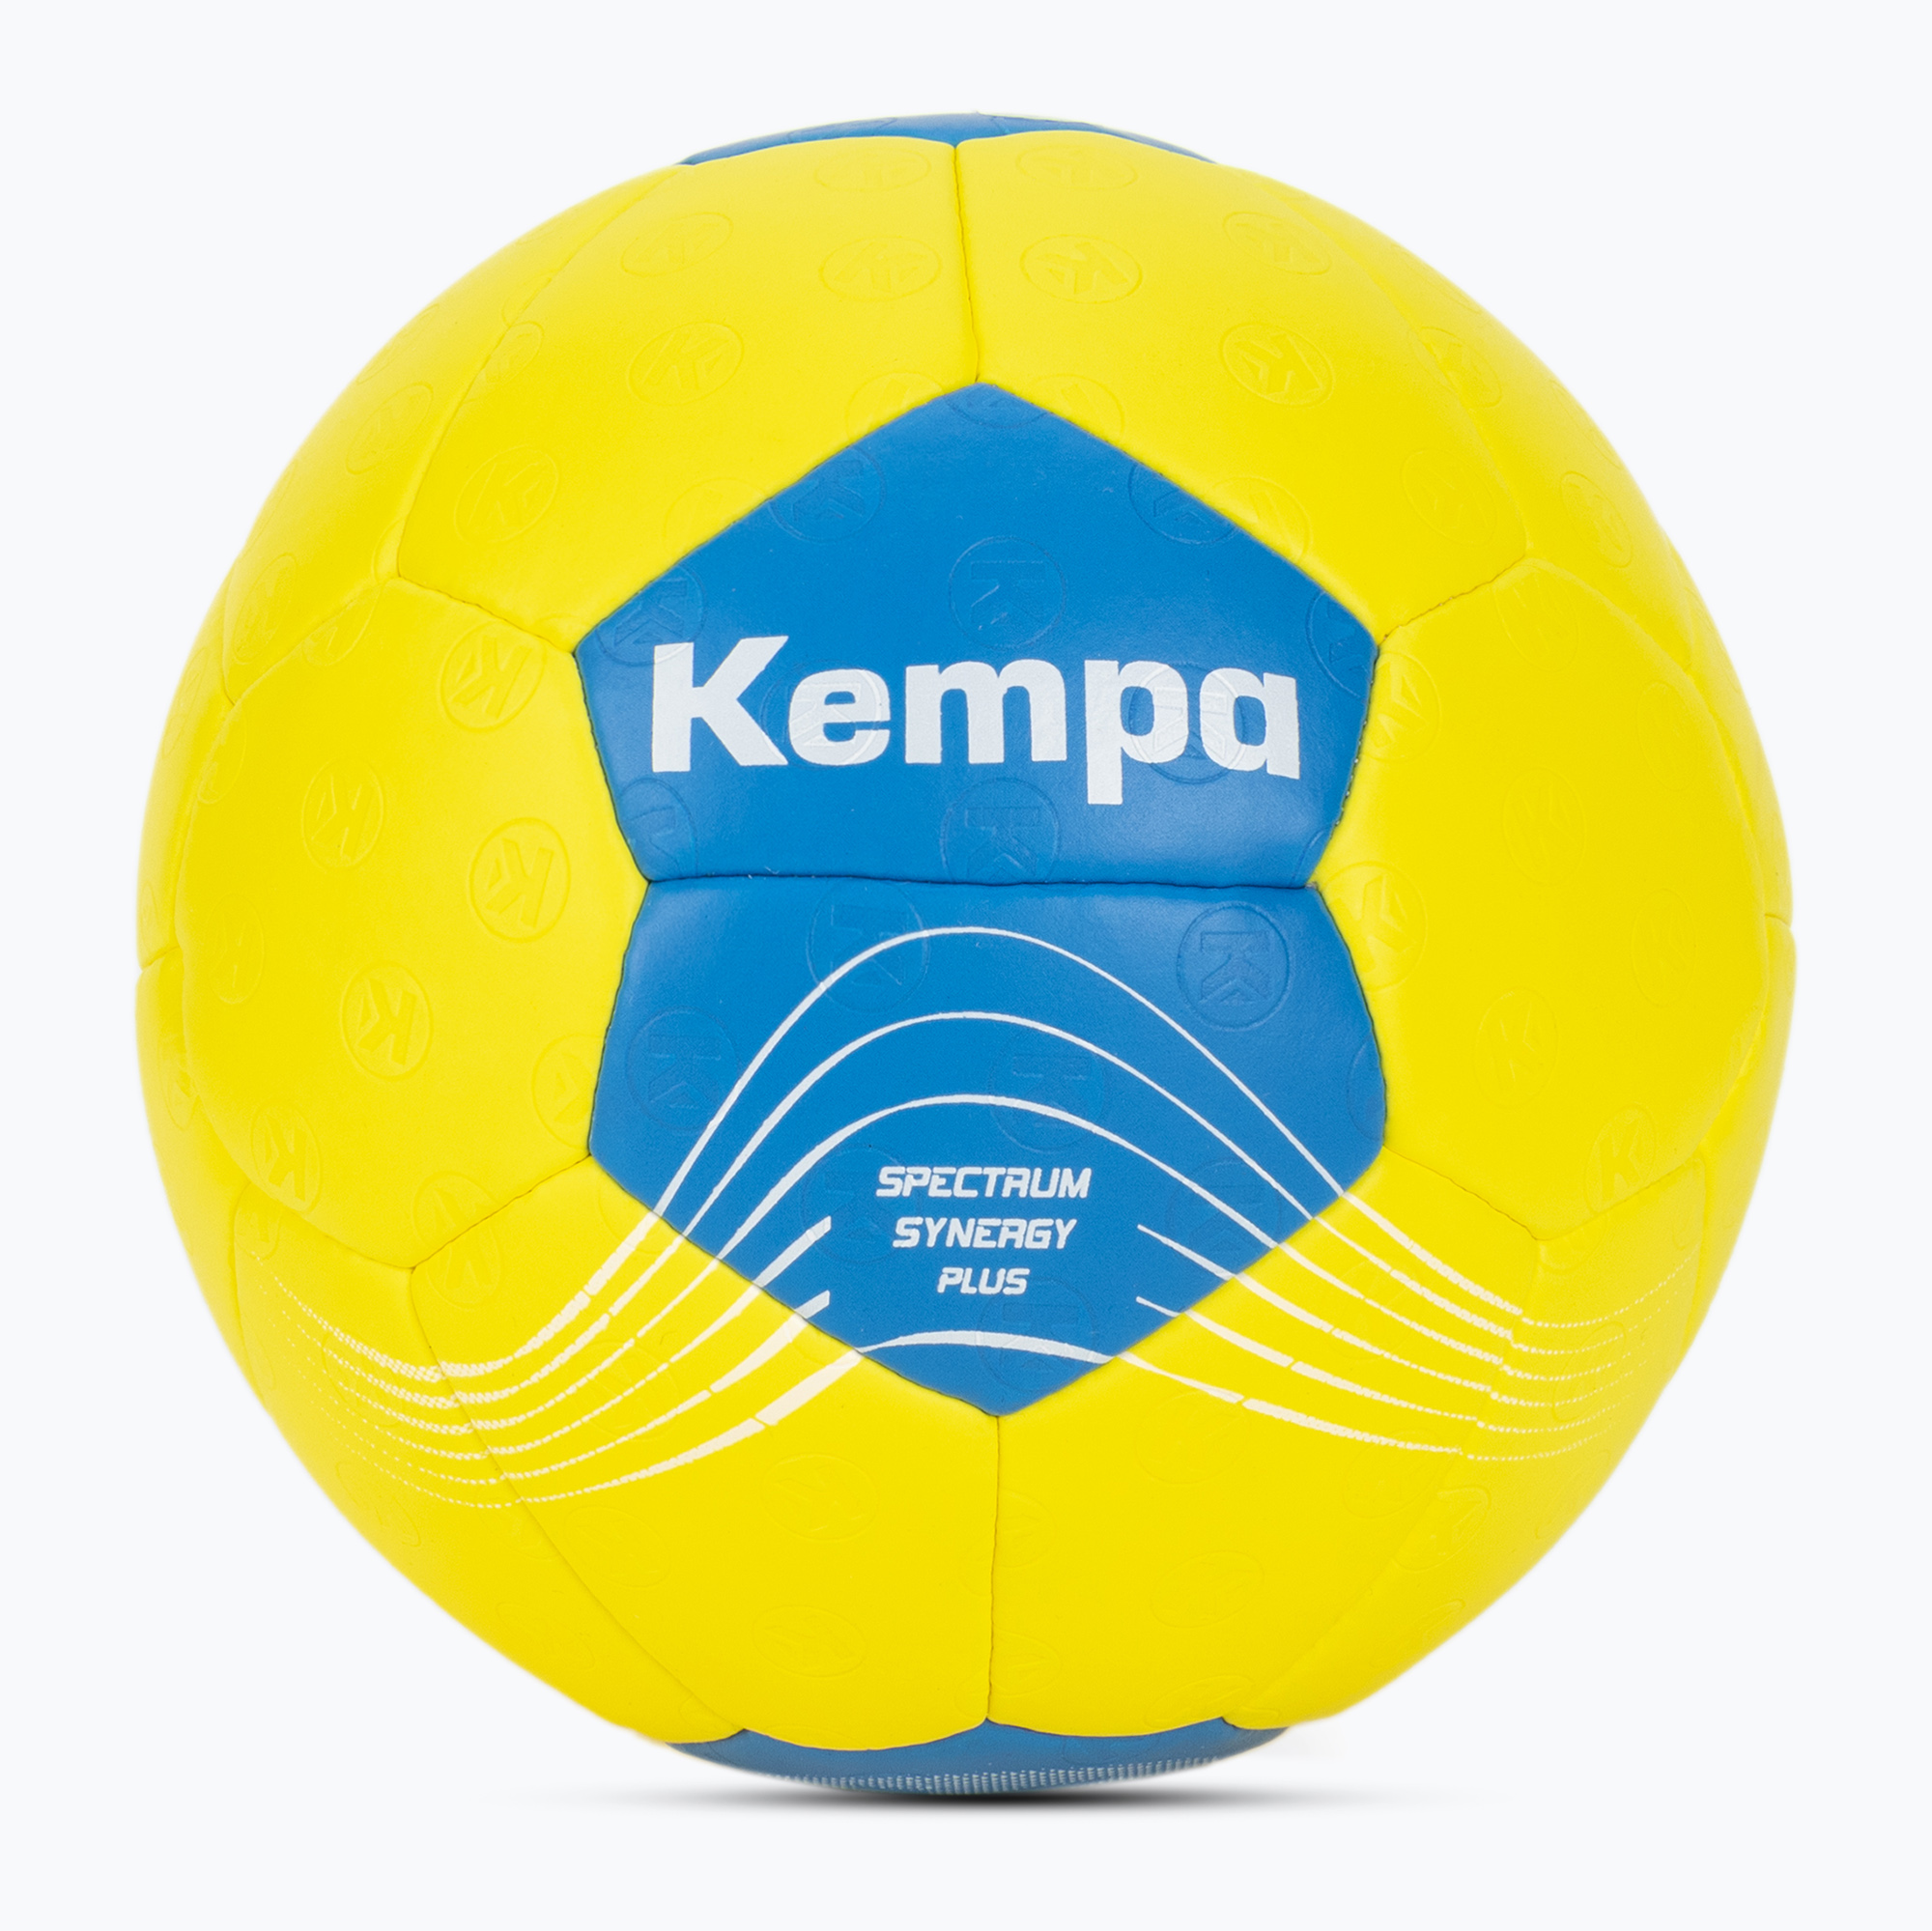 Kempa Spectrum Synergy Plus handbal 200191401/0 mărimea 0